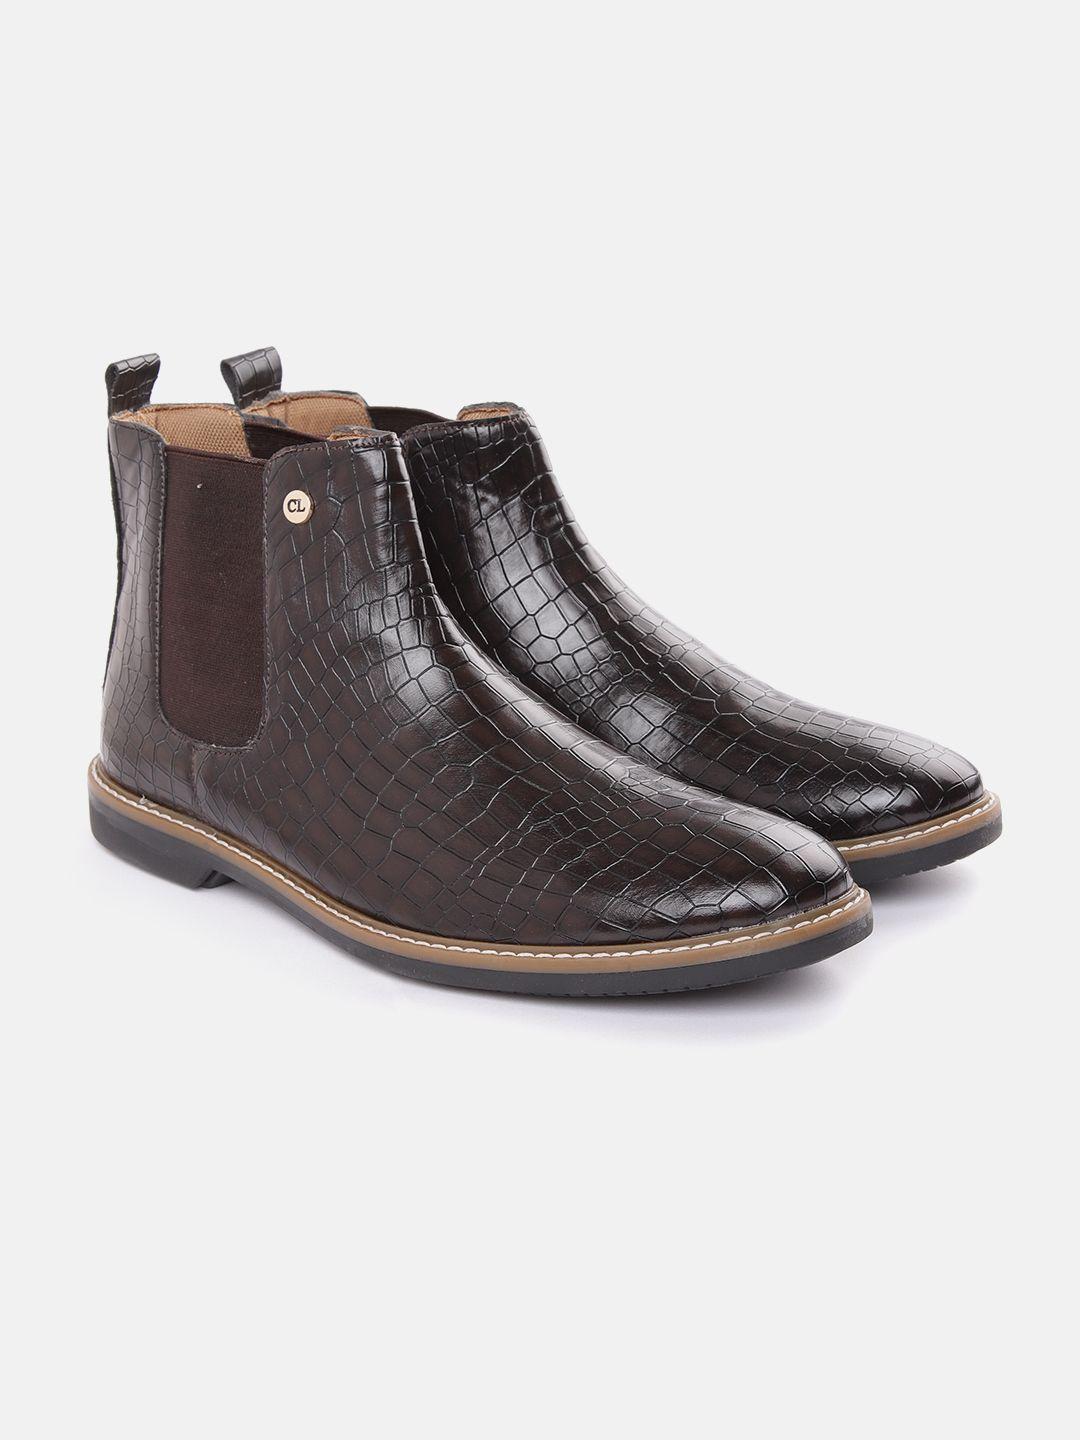 carlton-london-men-coffee-brown-croc-textured-mid-top-chelsea-boots